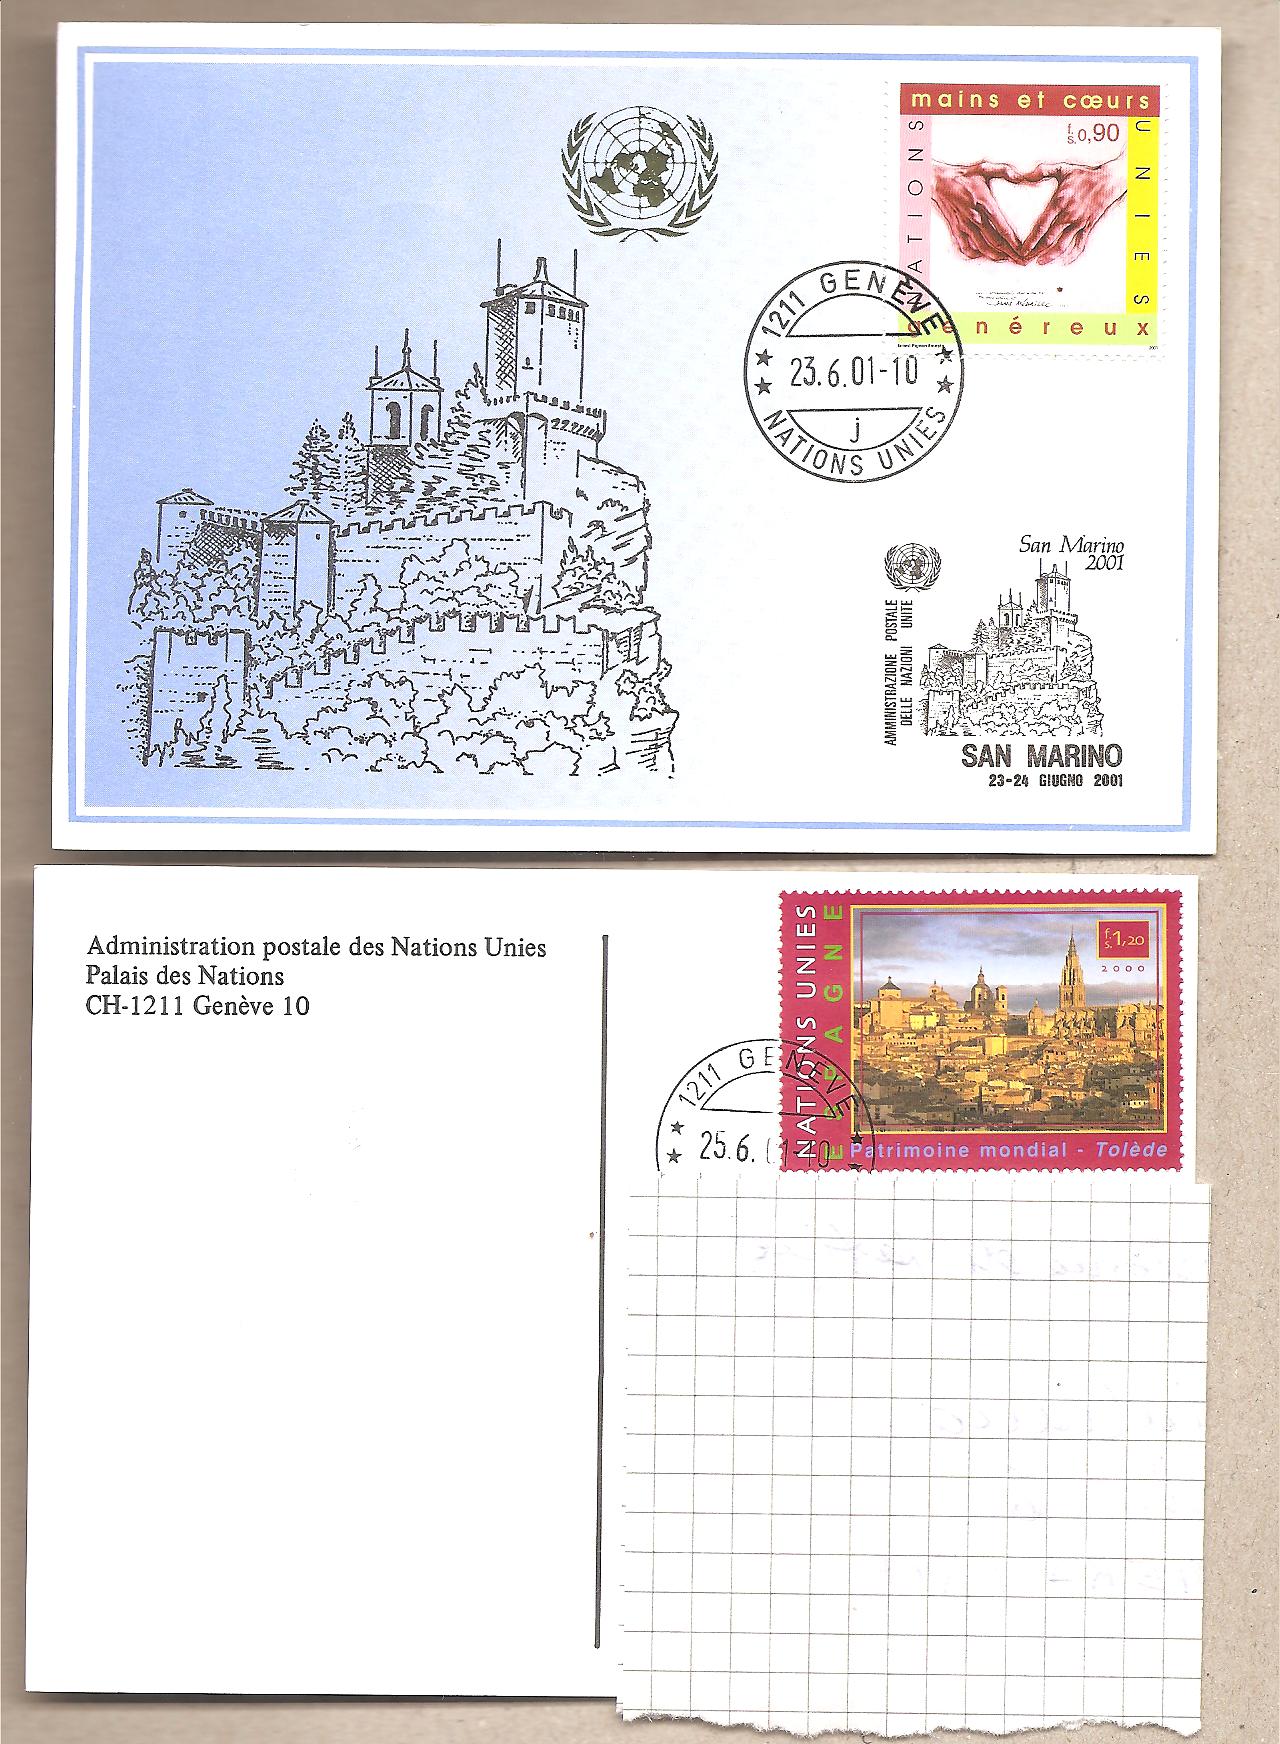 42476 - Onu Ginevra - Cartolina viaggiata Partecipazione a San Marino 2001